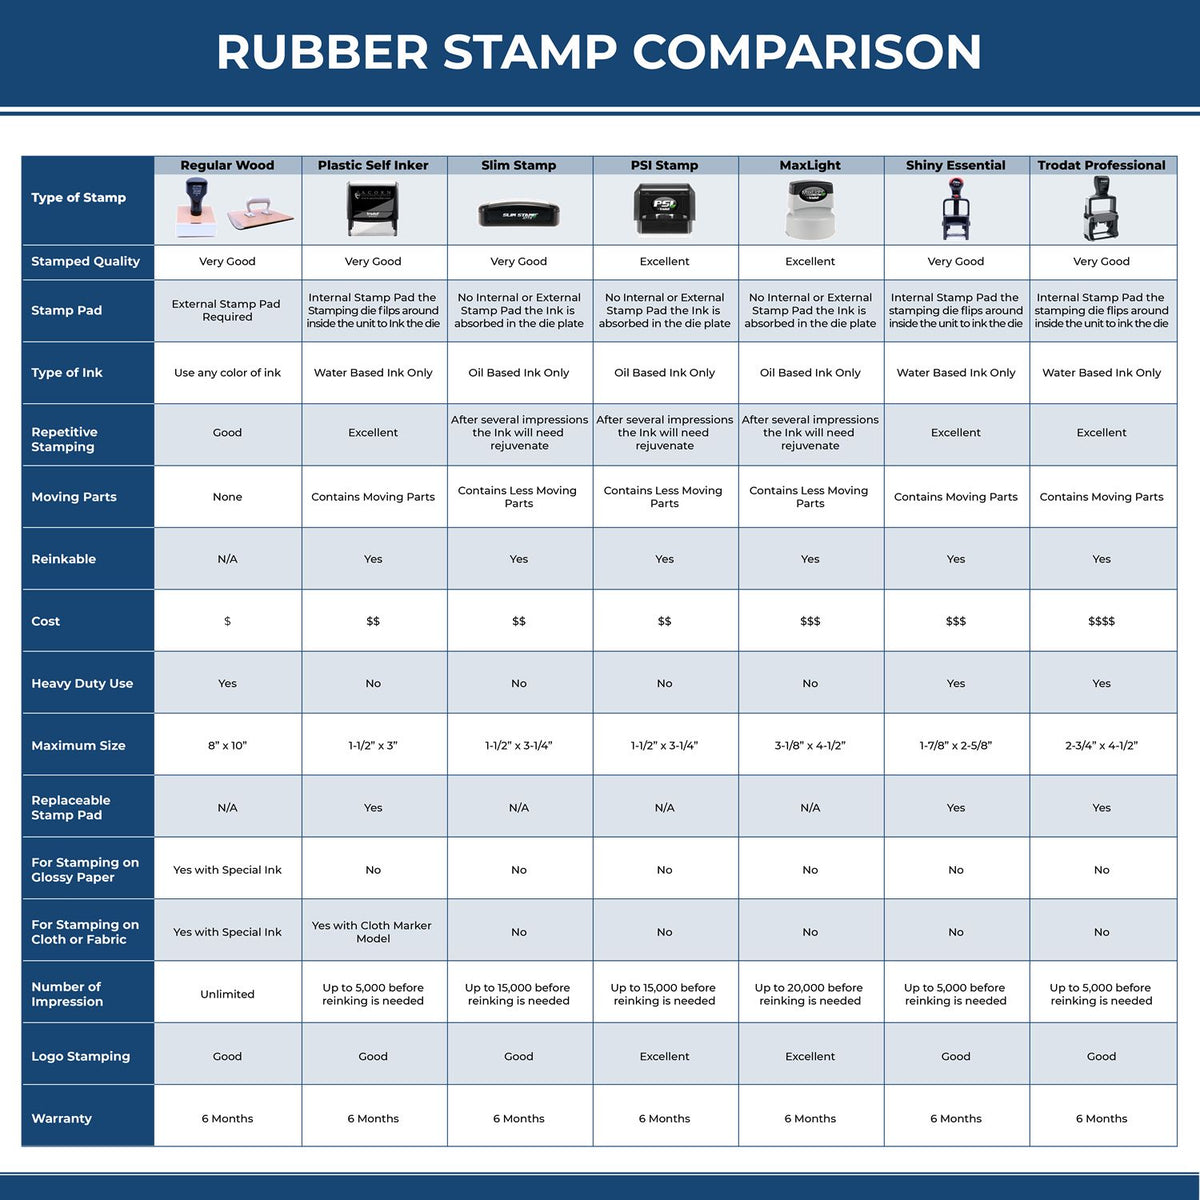 Large Plaintiff Rubber Stamp 4631R Rubber Stamp Comparison